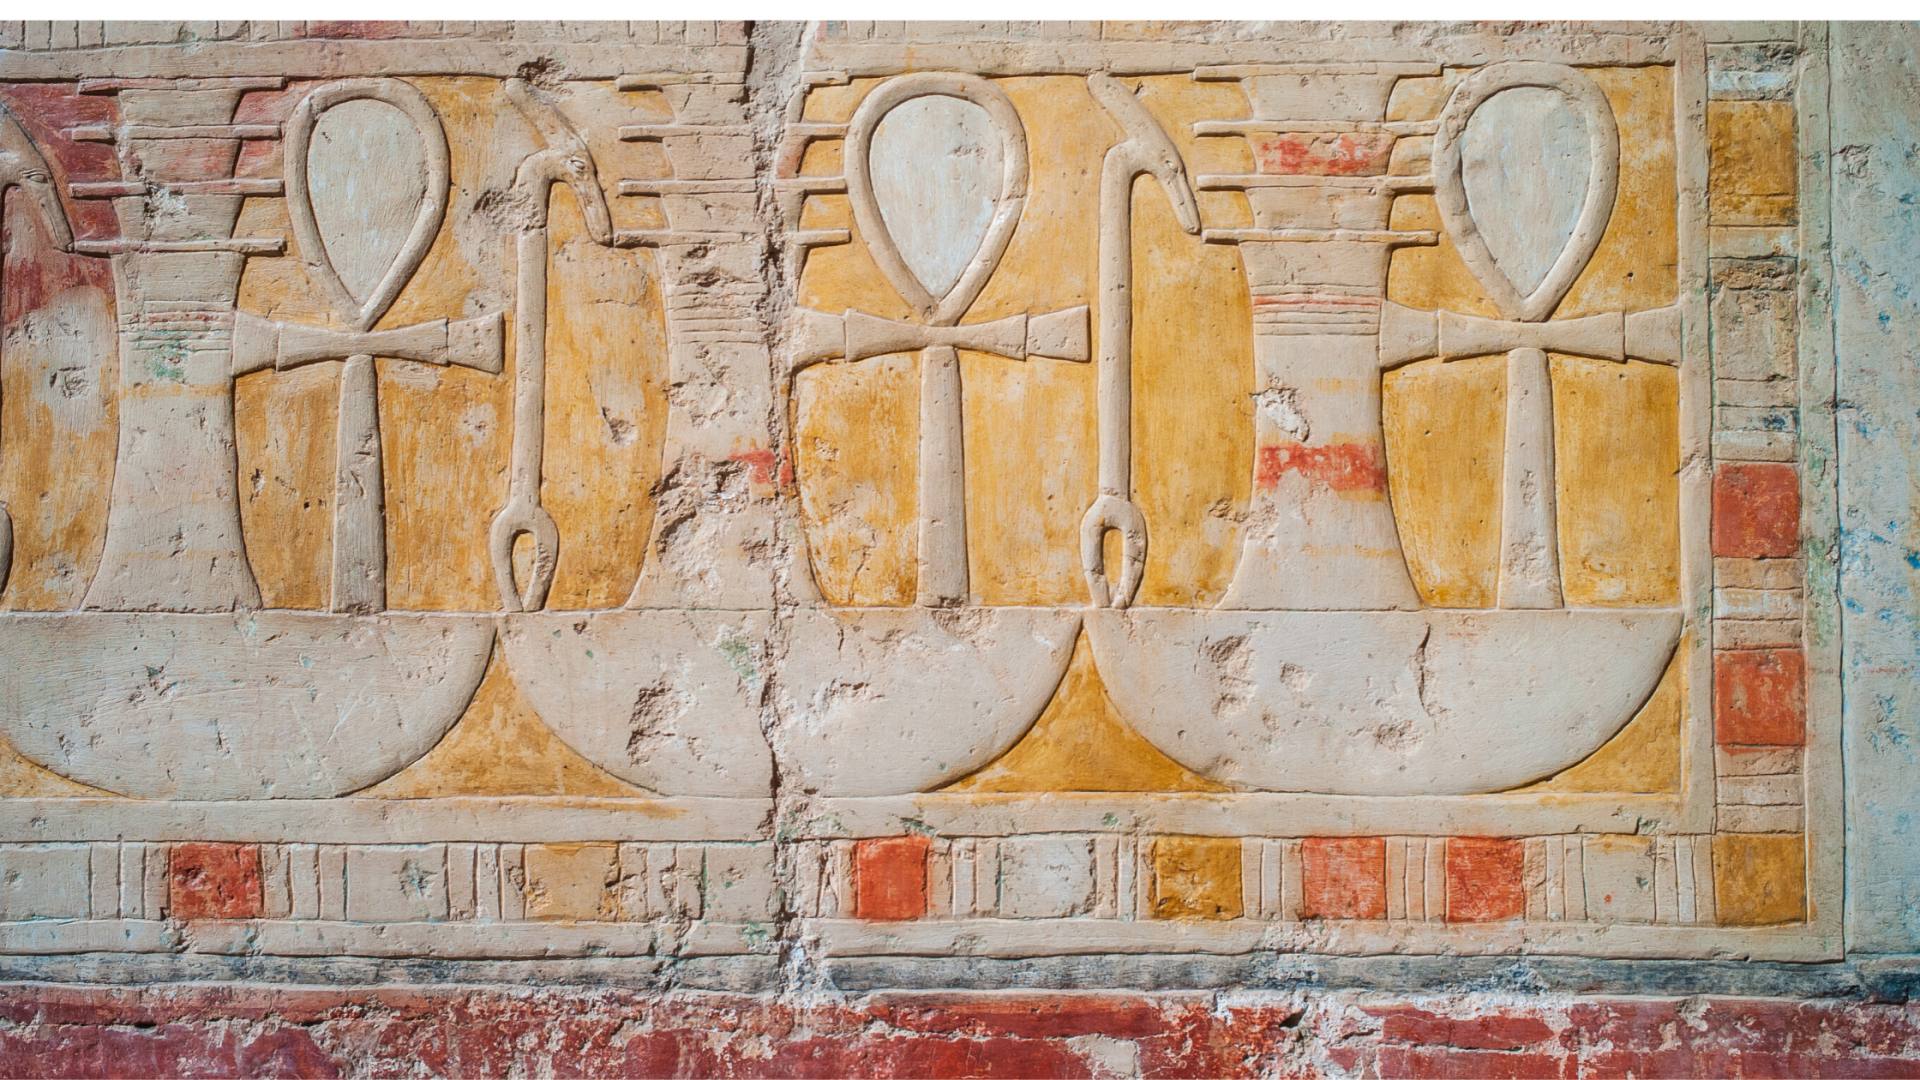 Ankh reliefs in the temple of Hatshepsut in Luxor